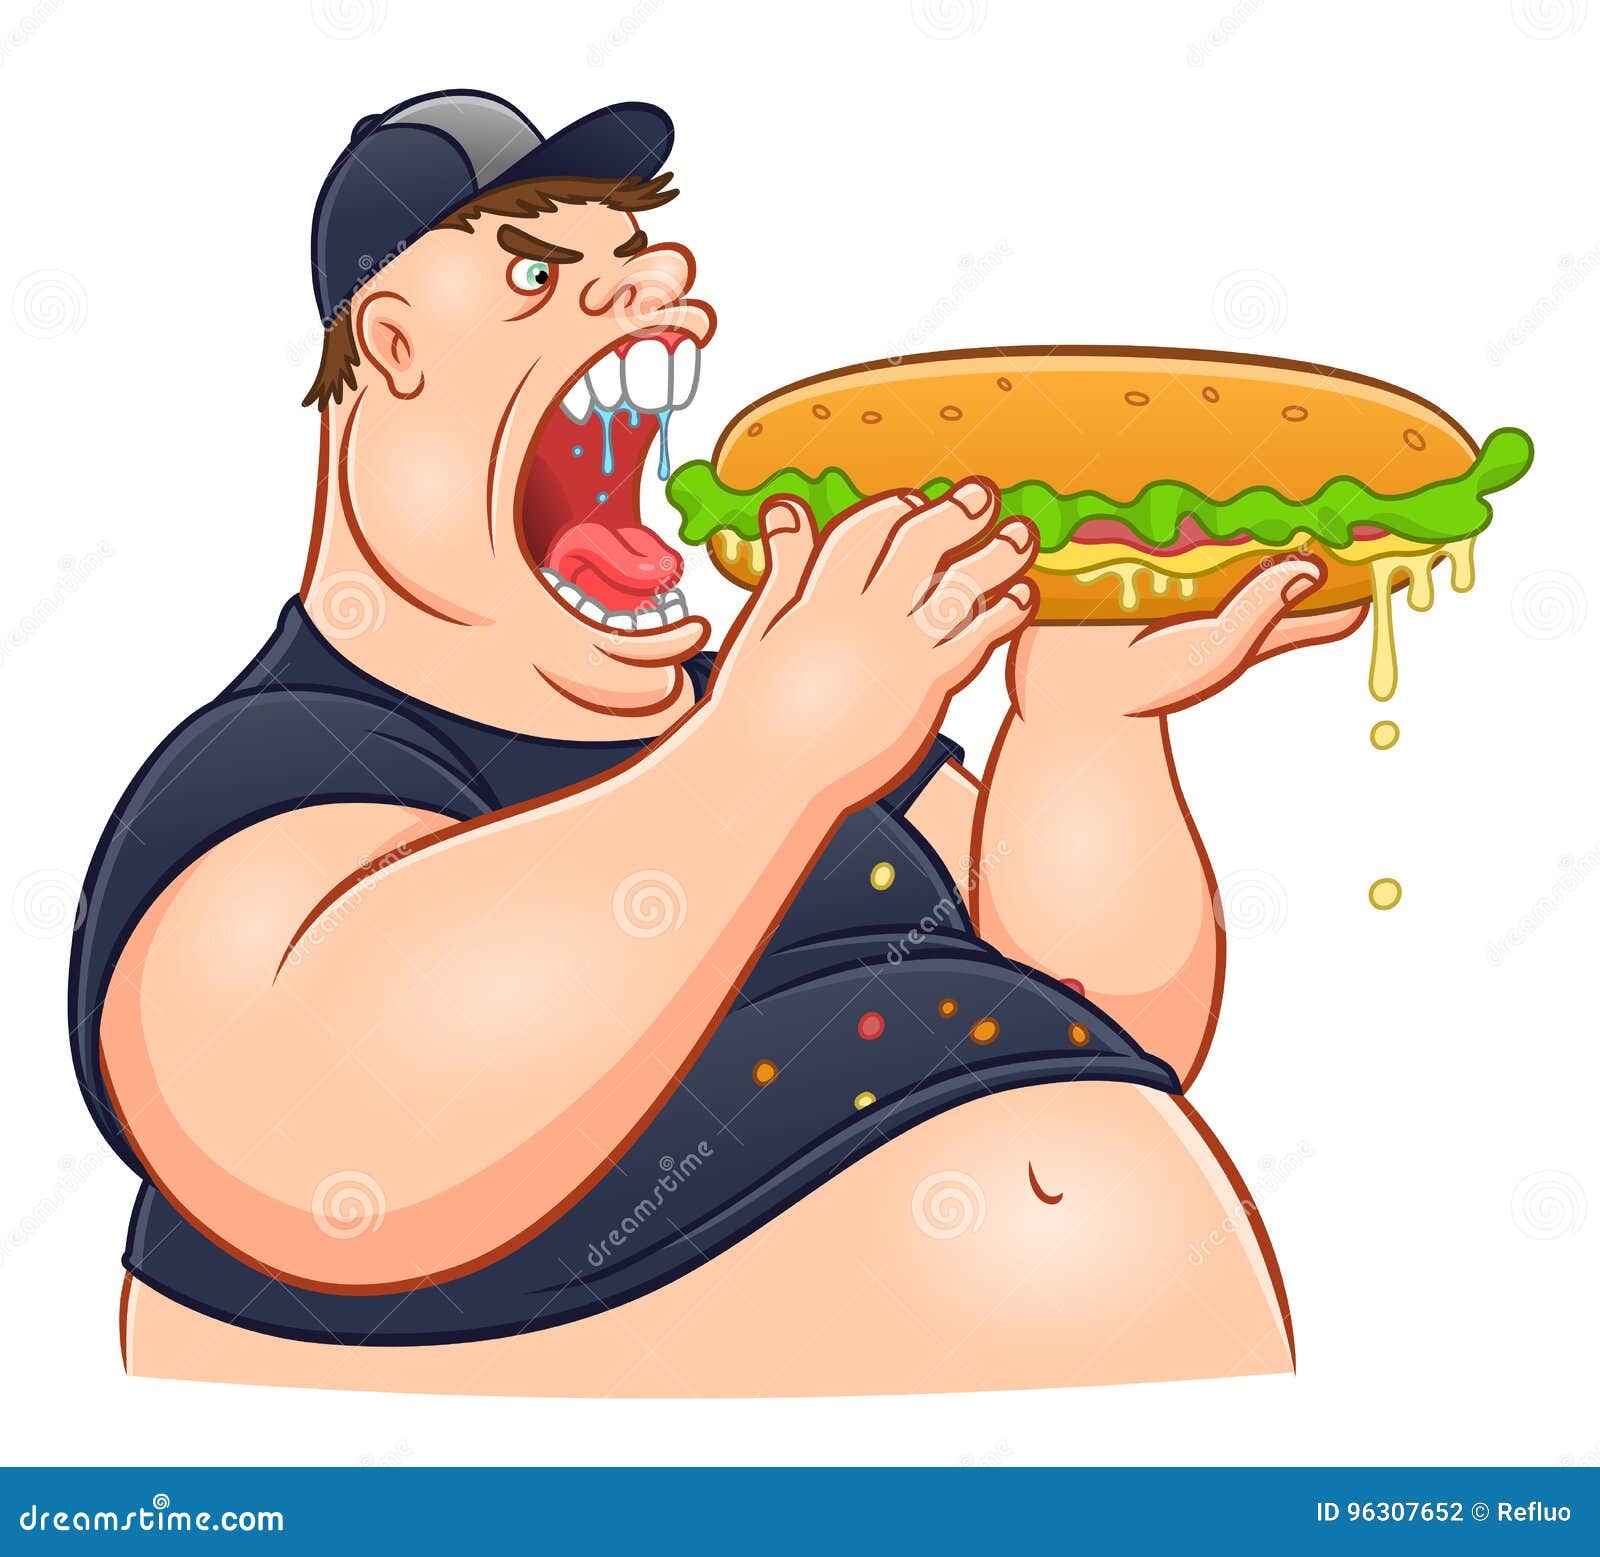 Fat Man Eating Giant Sandwich Stock Vector - Illustration of voracity,  food: 96307652